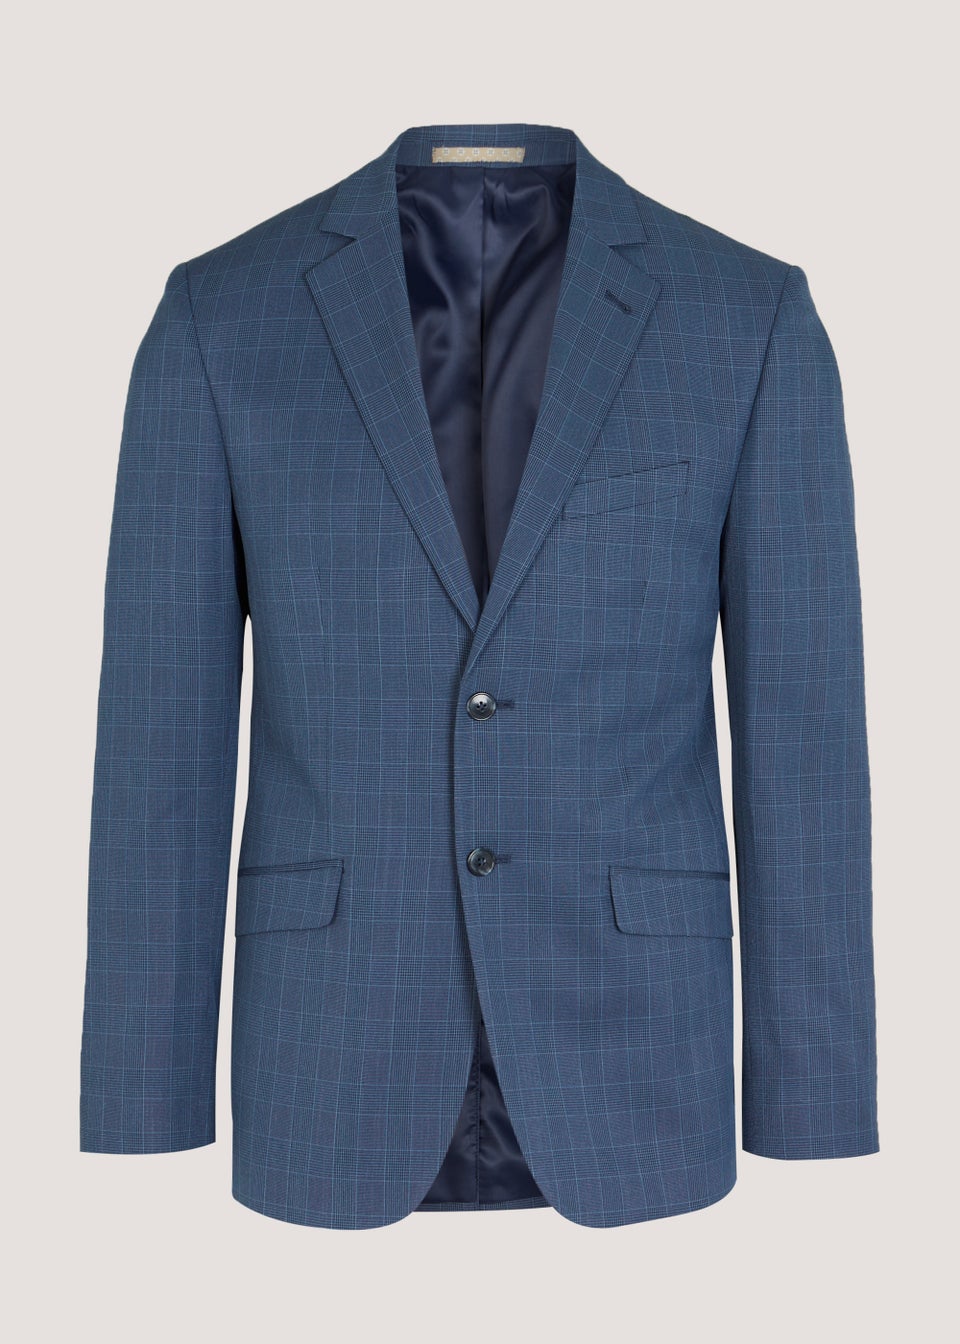 Taylor & Wright Hemsworth Blue Check Slim Fit Suit Jacket